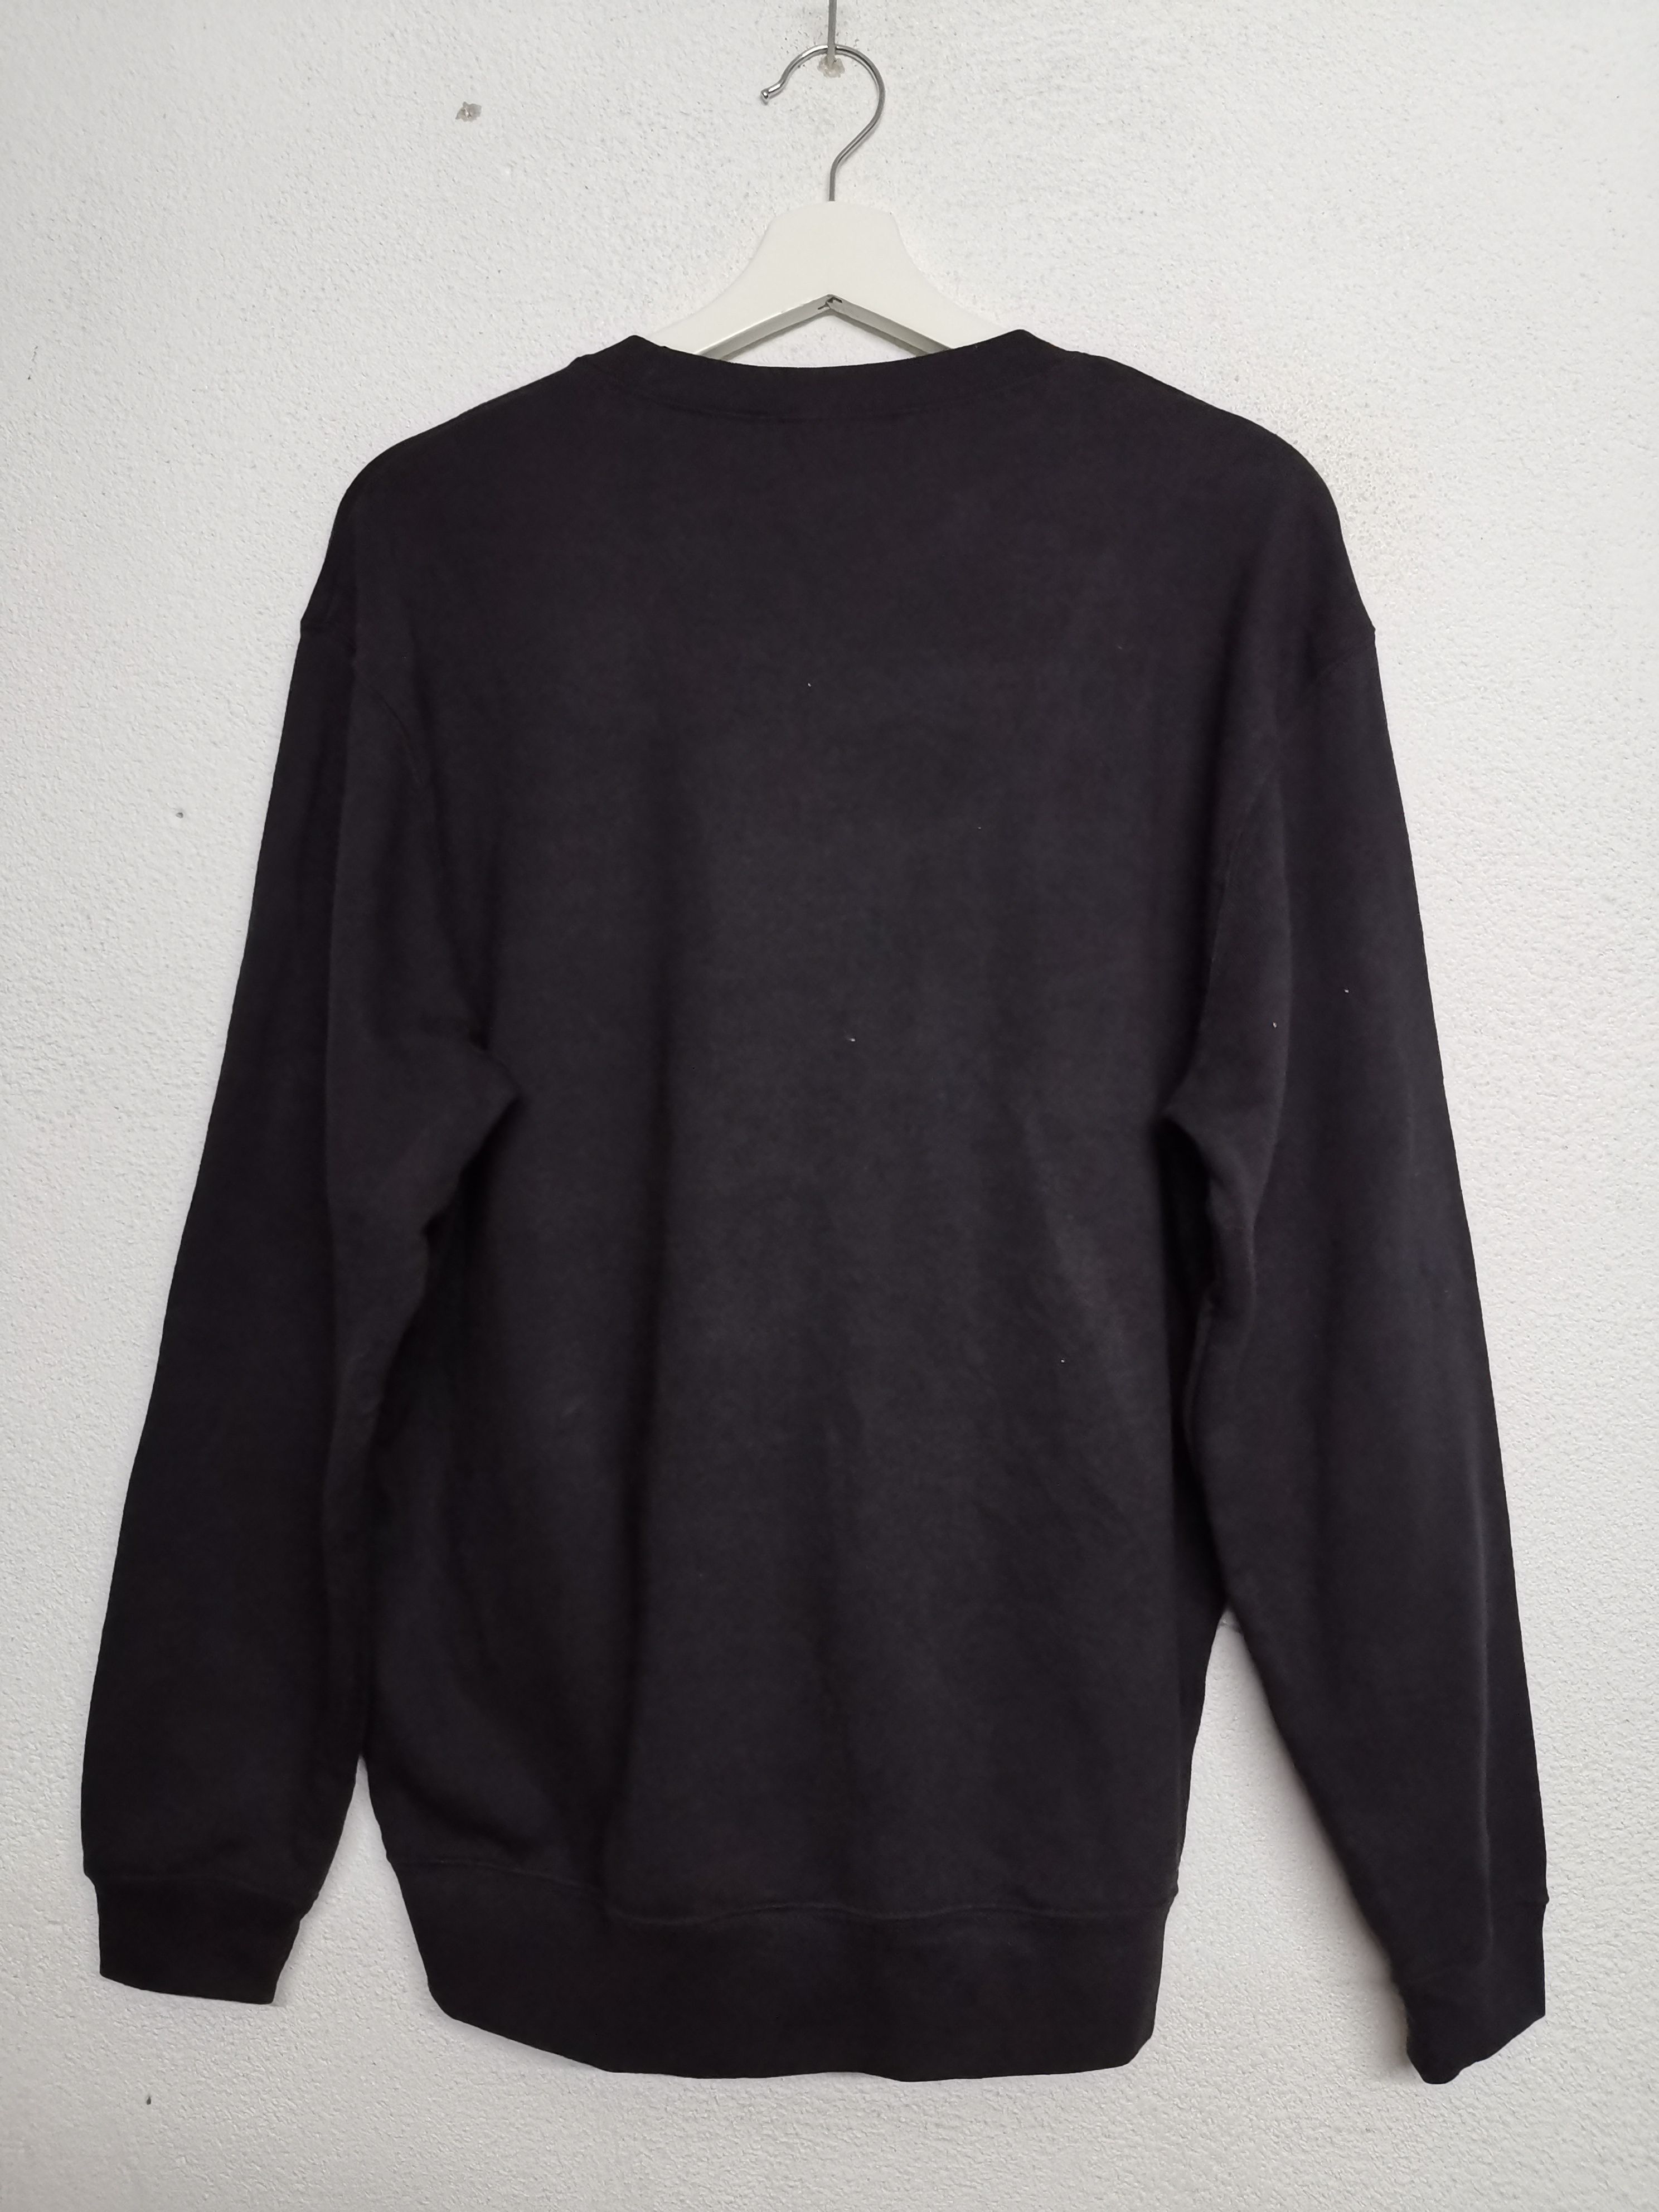 Designer Destruere Gnarly Embroidery Logo Black Sweatshirt Size US L / EU 52-54 / 3 - 6 Thumbnail